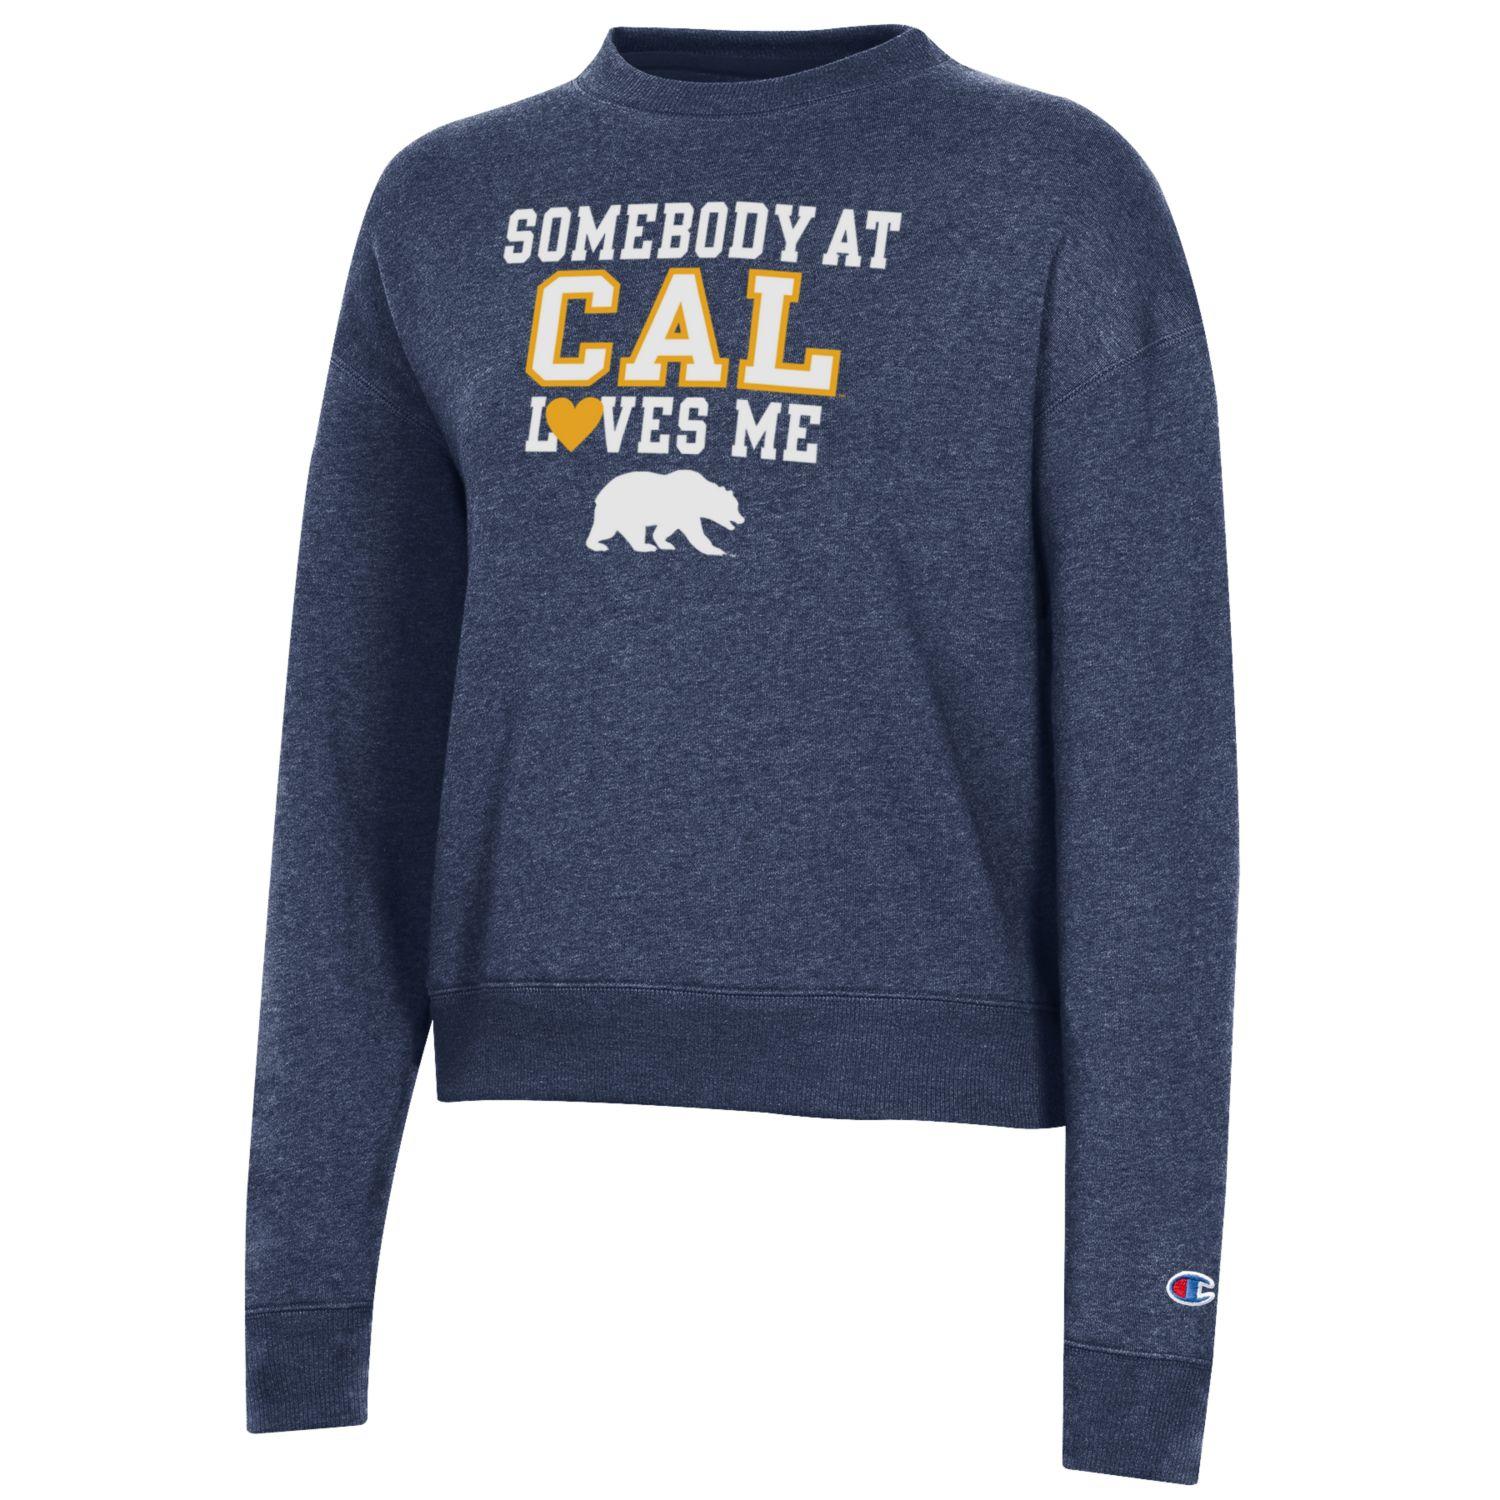 U.C. Berkeley Somebody at Cal loves me Champion Triumph crewneck sweatshirt-Navy-Shop College Wear